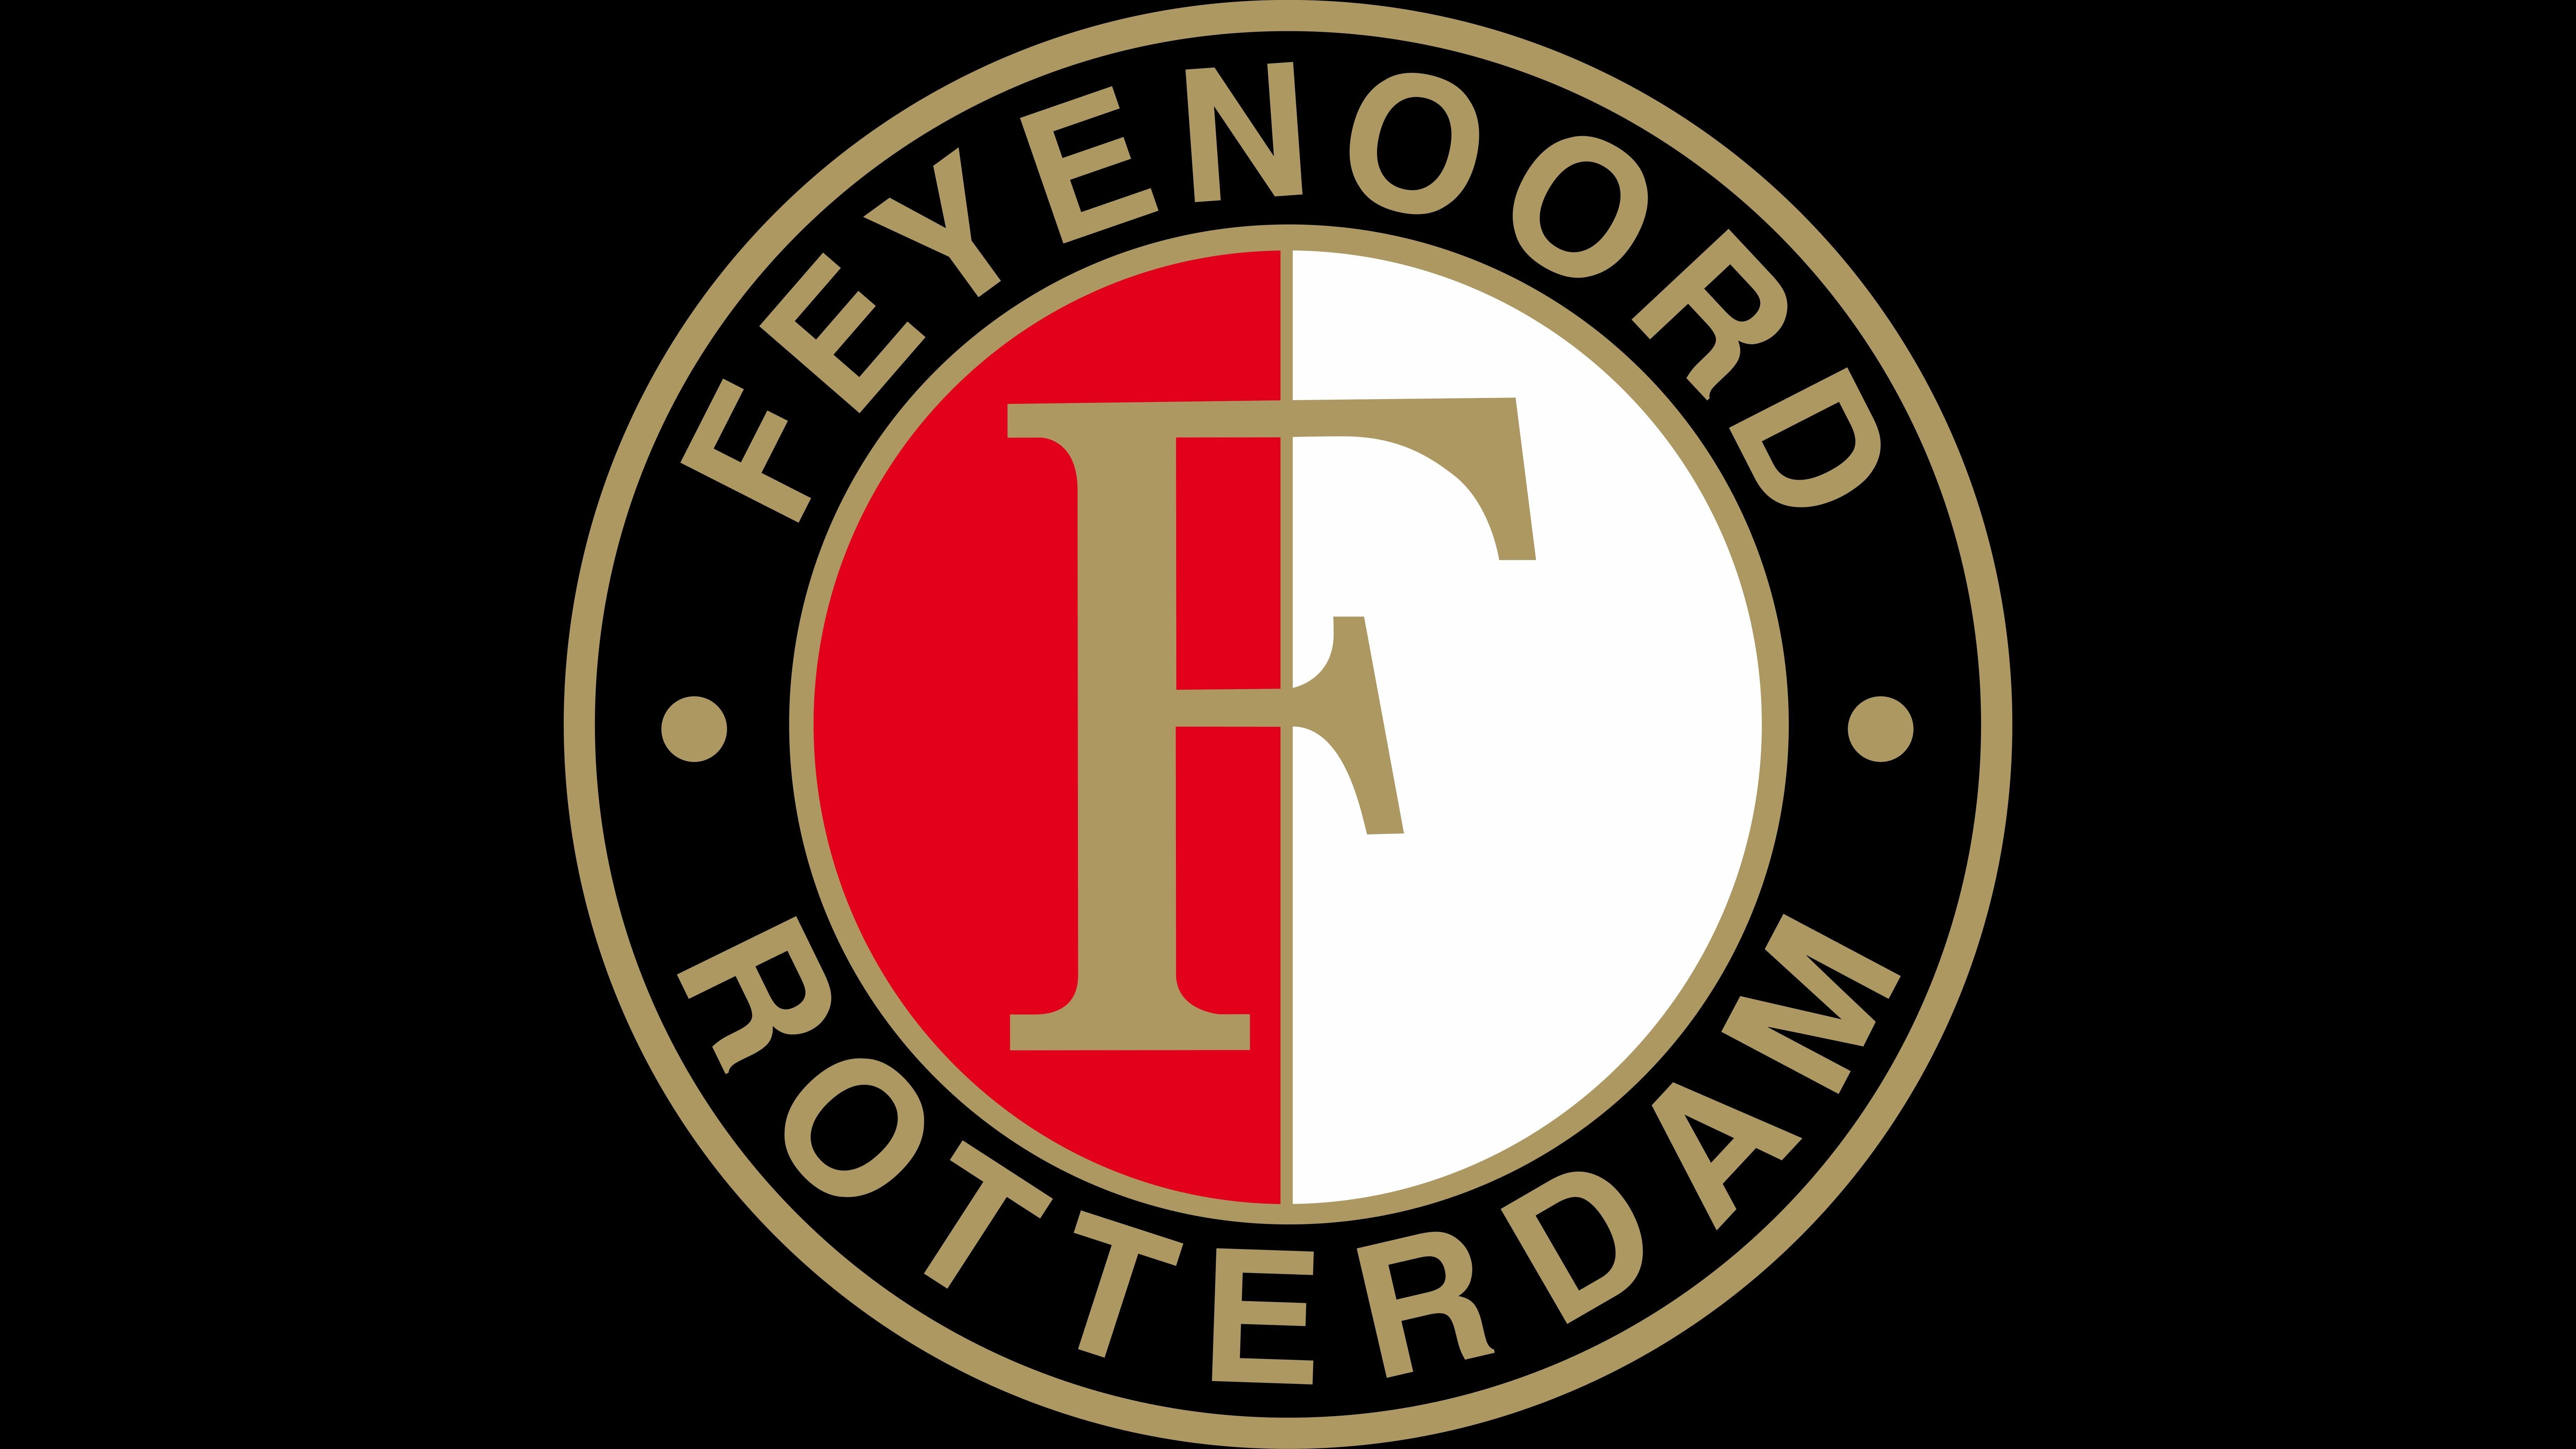 Feyenoord HD Wallpaper